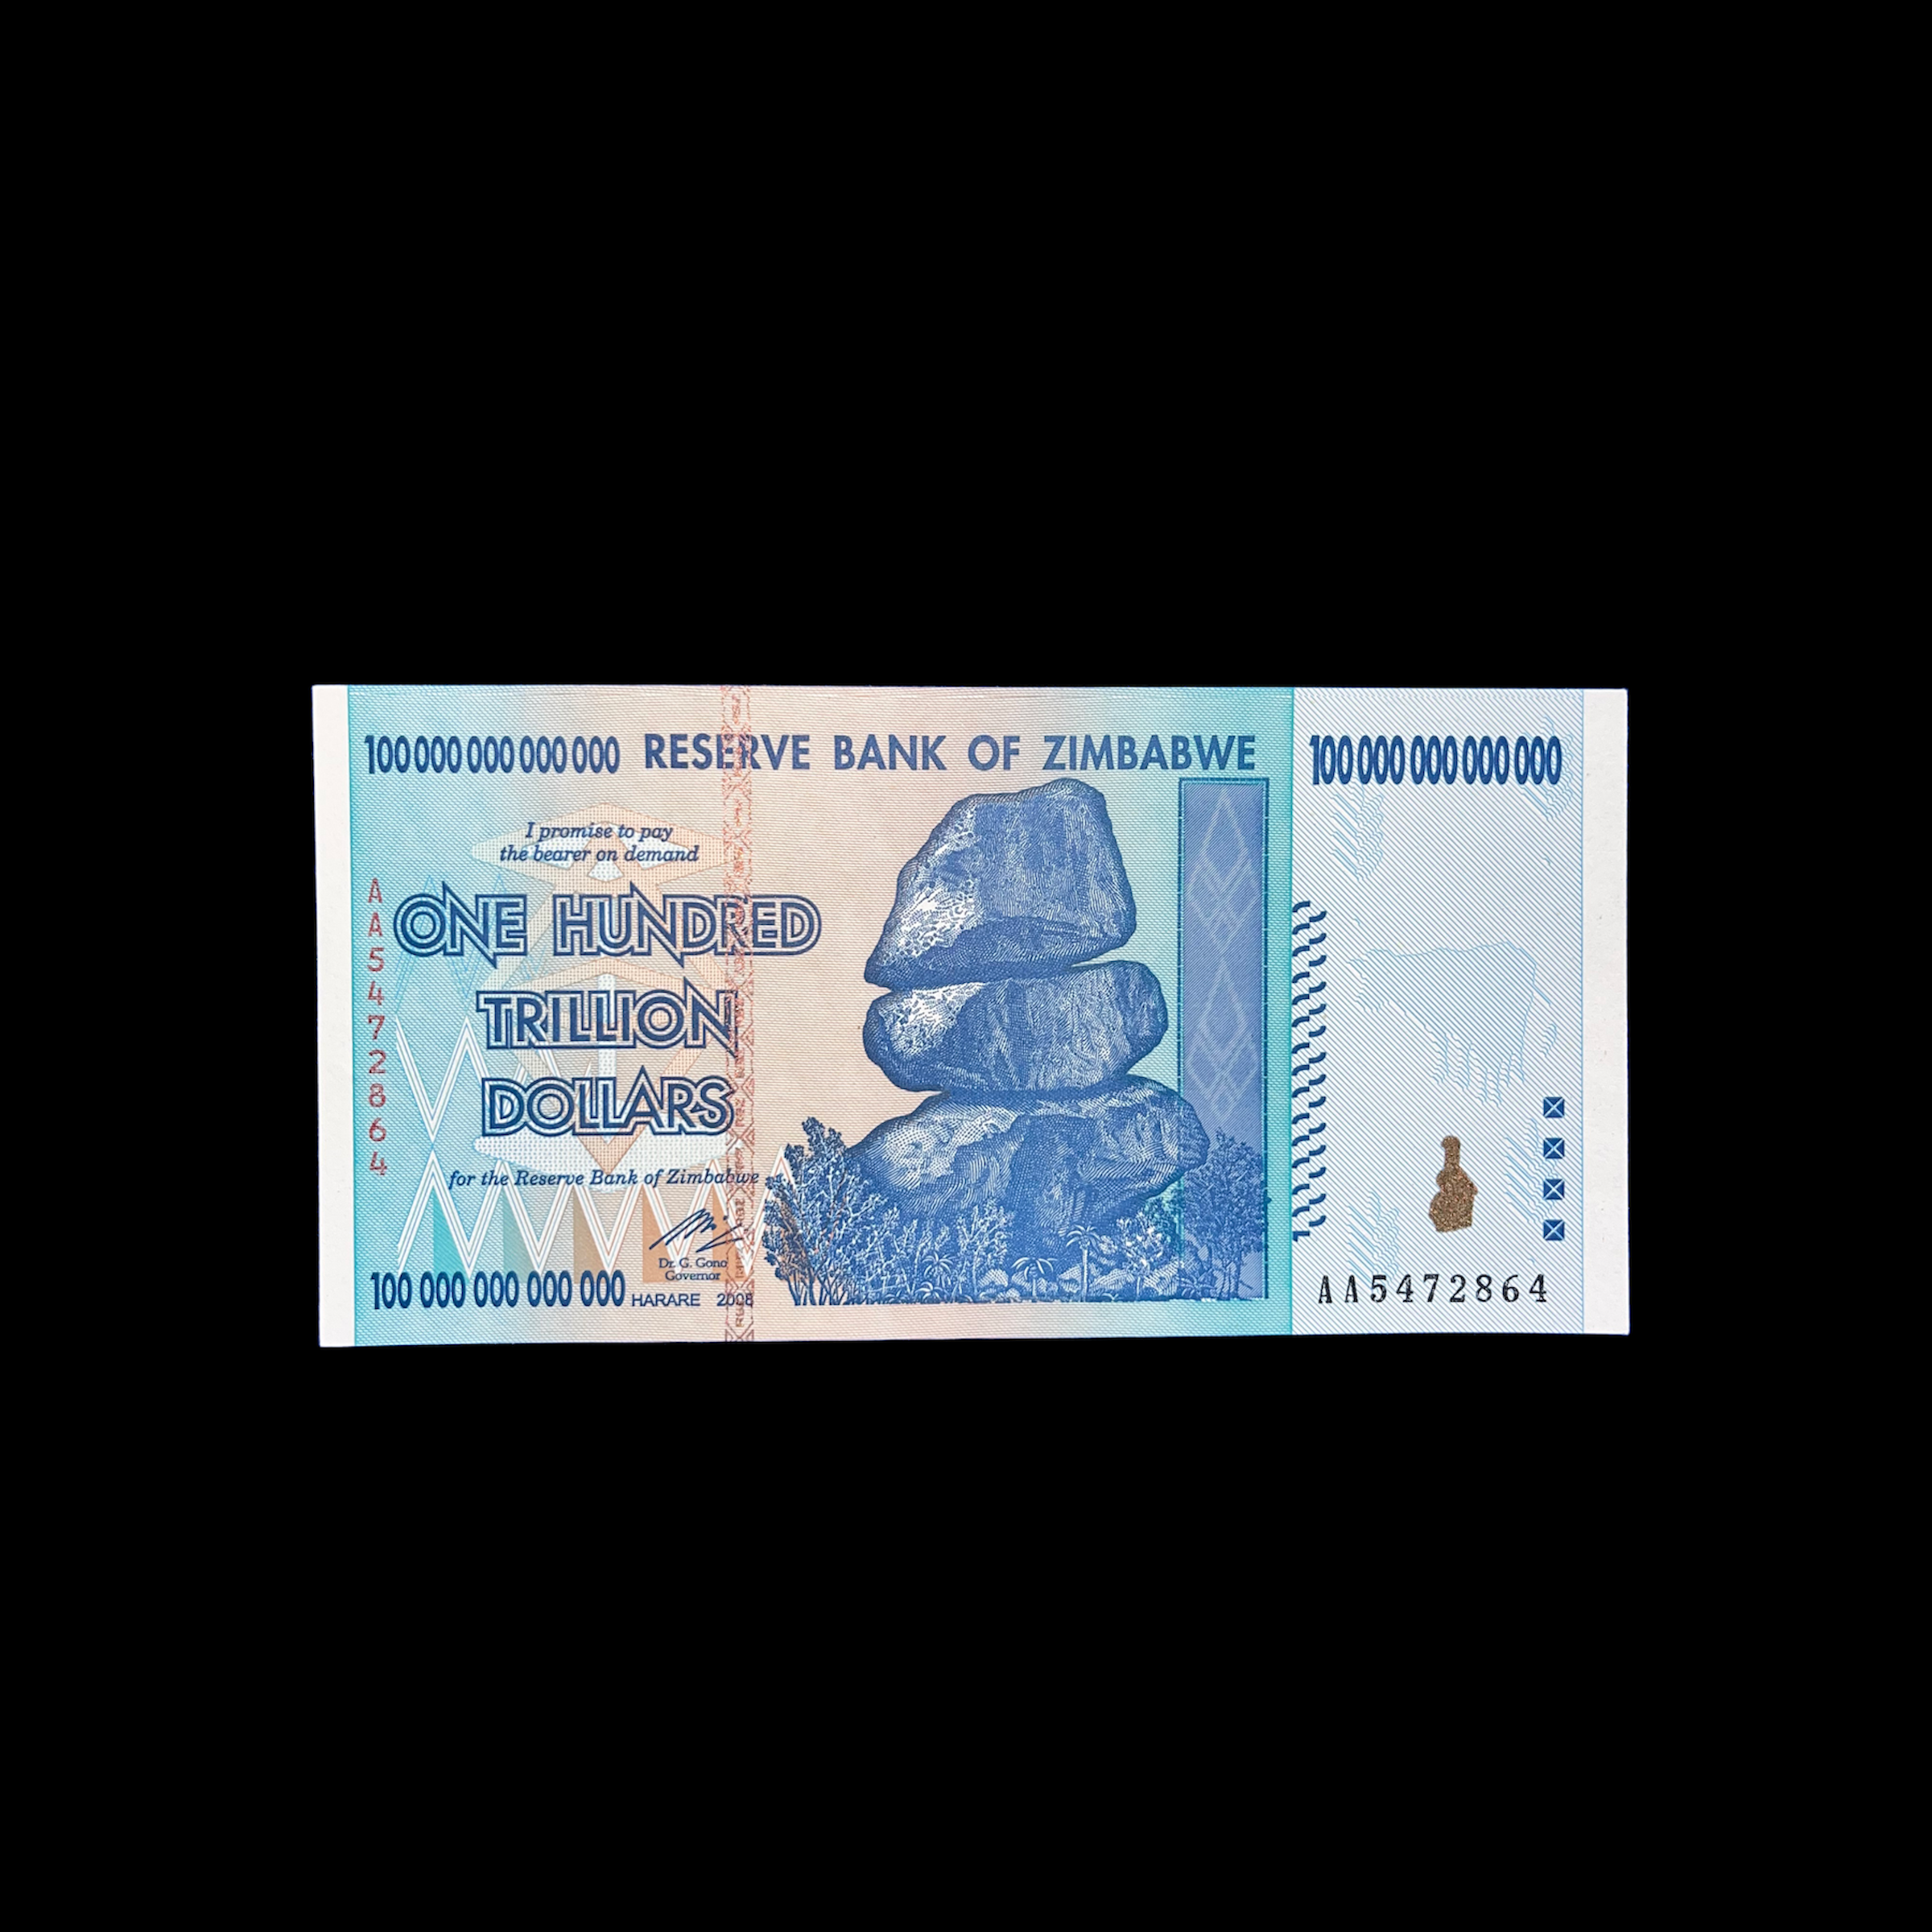 Zimbabwe-100 billones de dólares